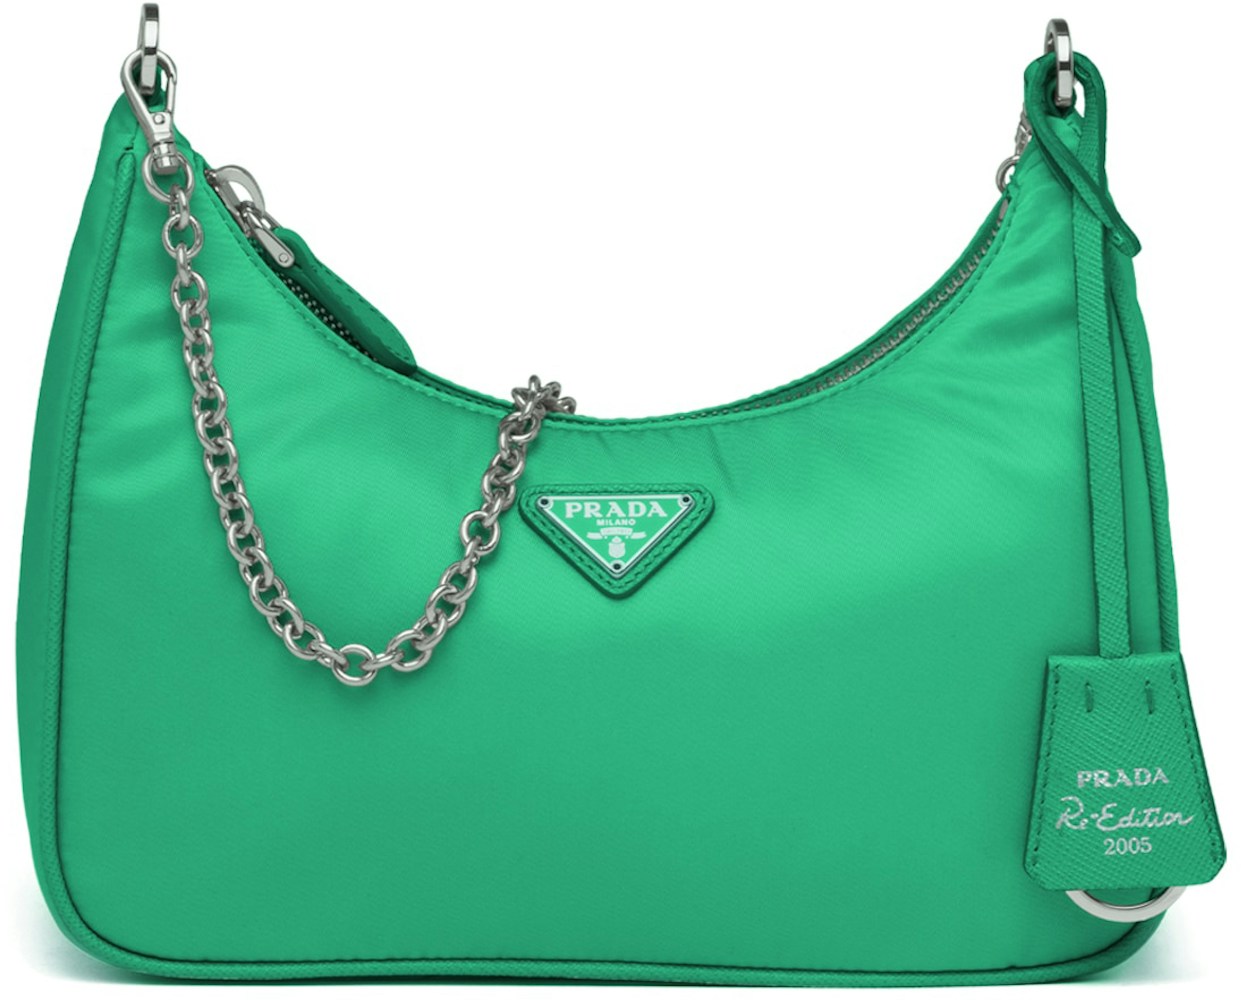 Prada Re Edition 2005 Shoulder Bag Nylon Mint Green In Nylon With Silver Tone